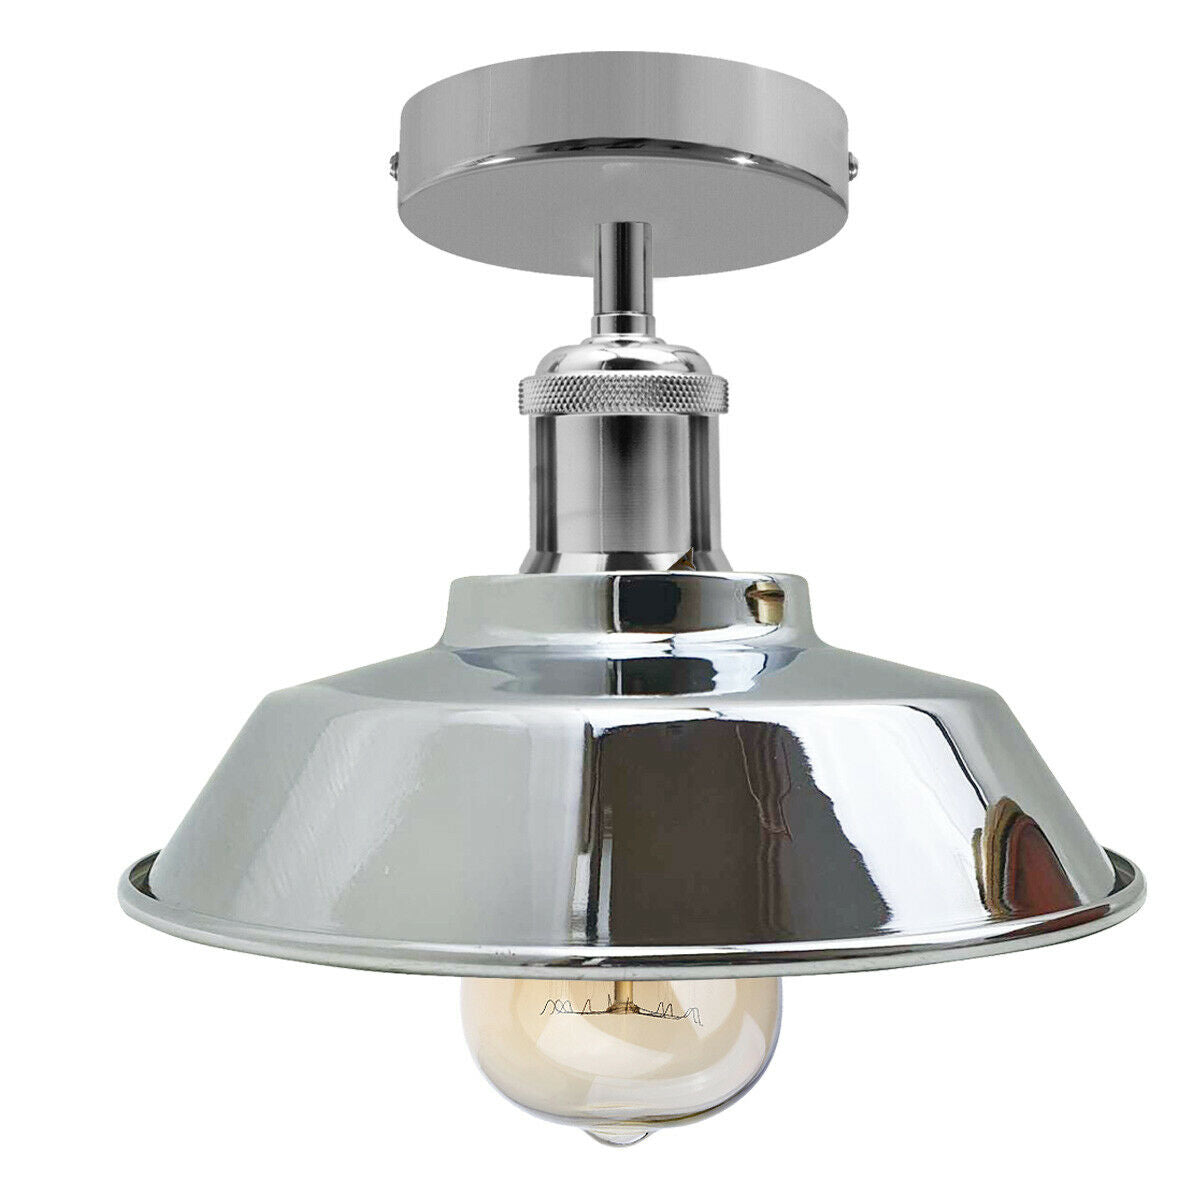 LEDSone industrial vintage Ceiling Light Retro Flush Mount Ceiling Lamp Shade Fitting UK~1924 - LEDSone UK Ltd